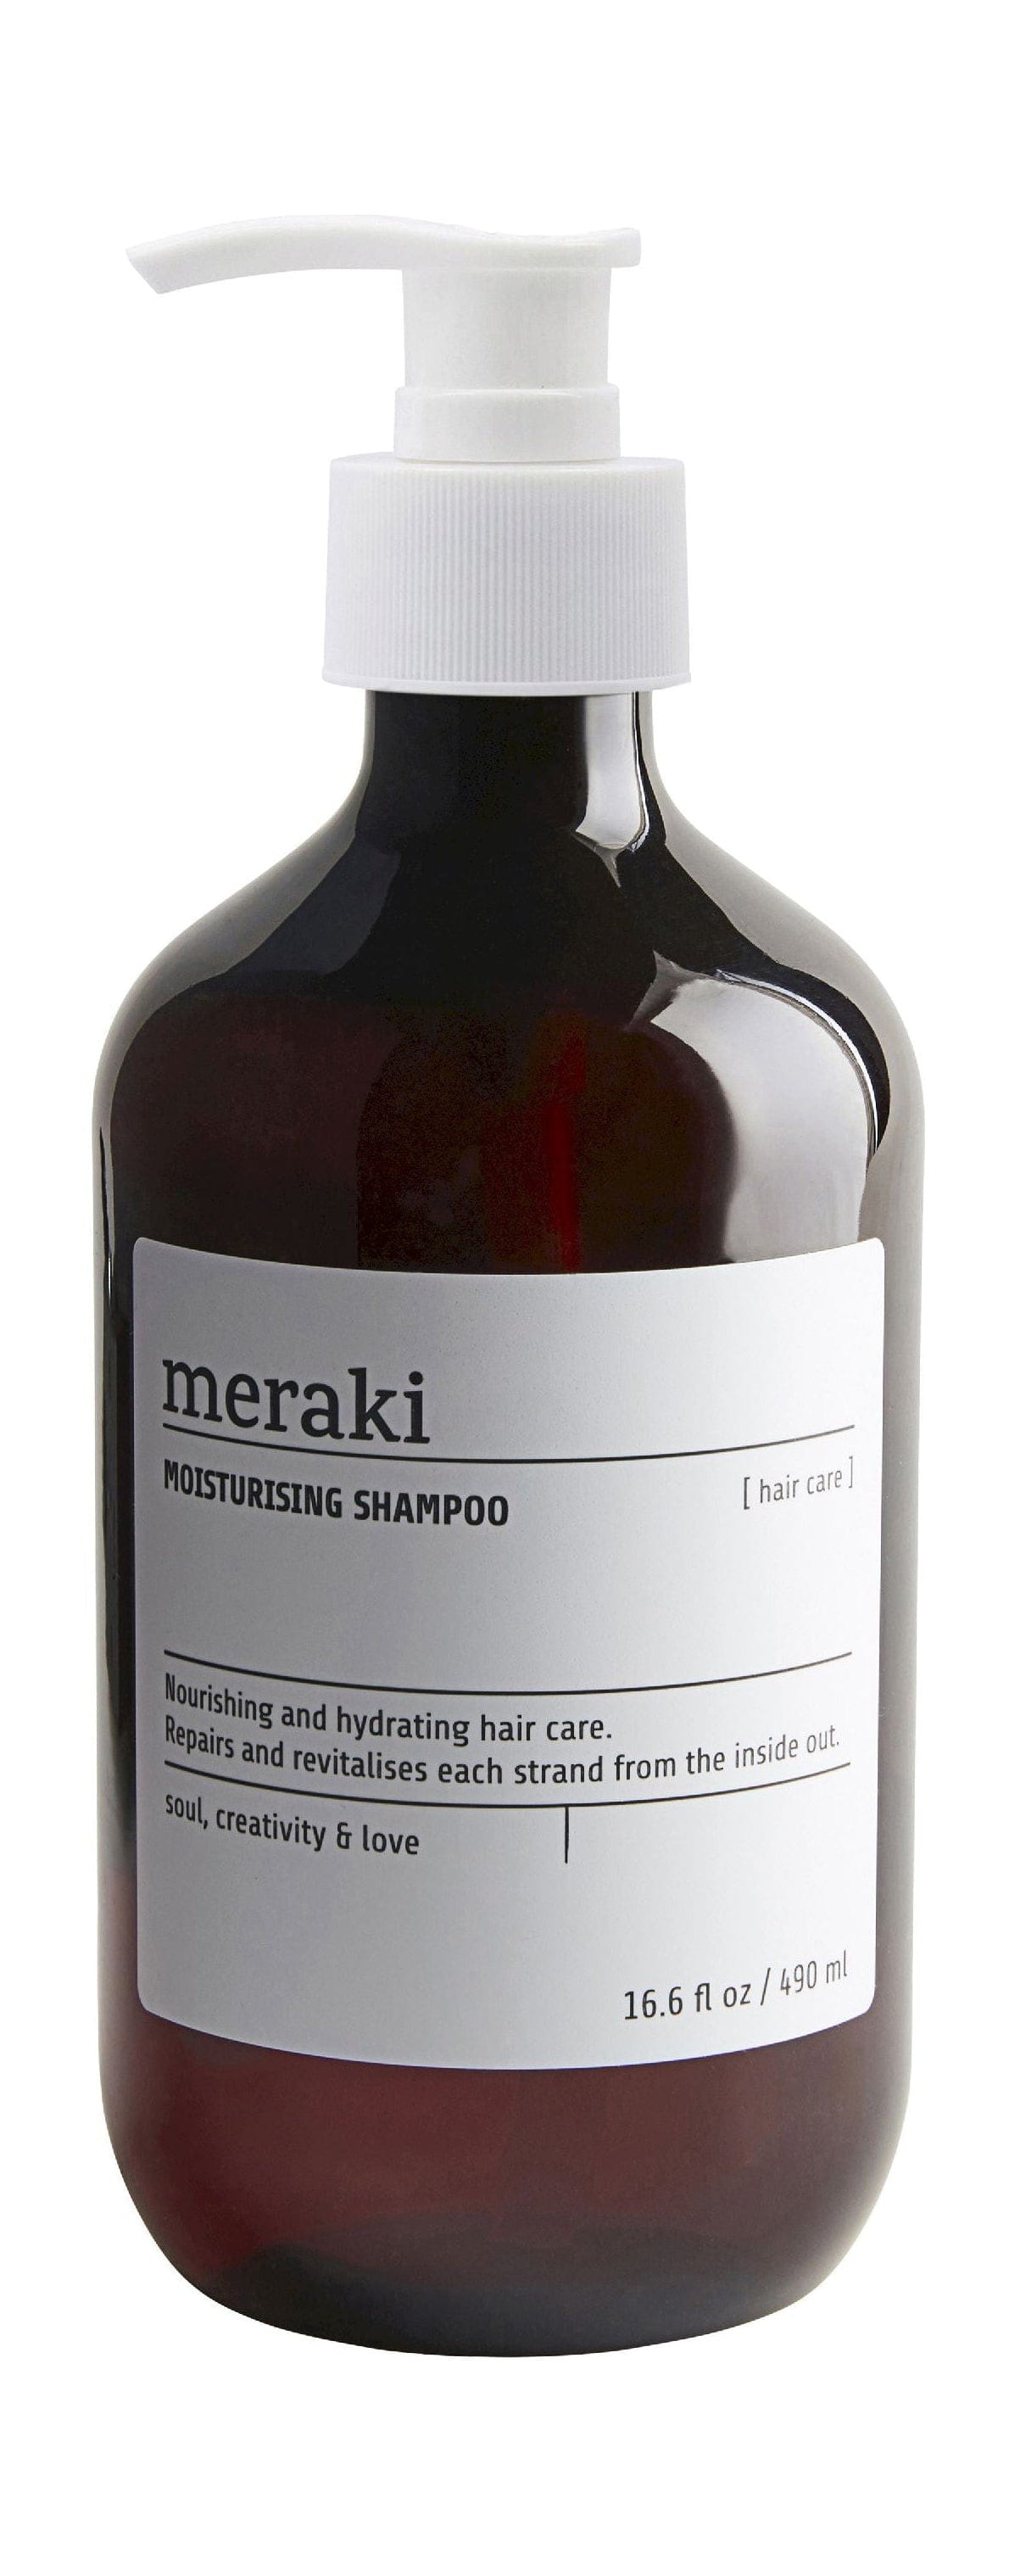 Meraki Moisturising Shampoo 490 ml